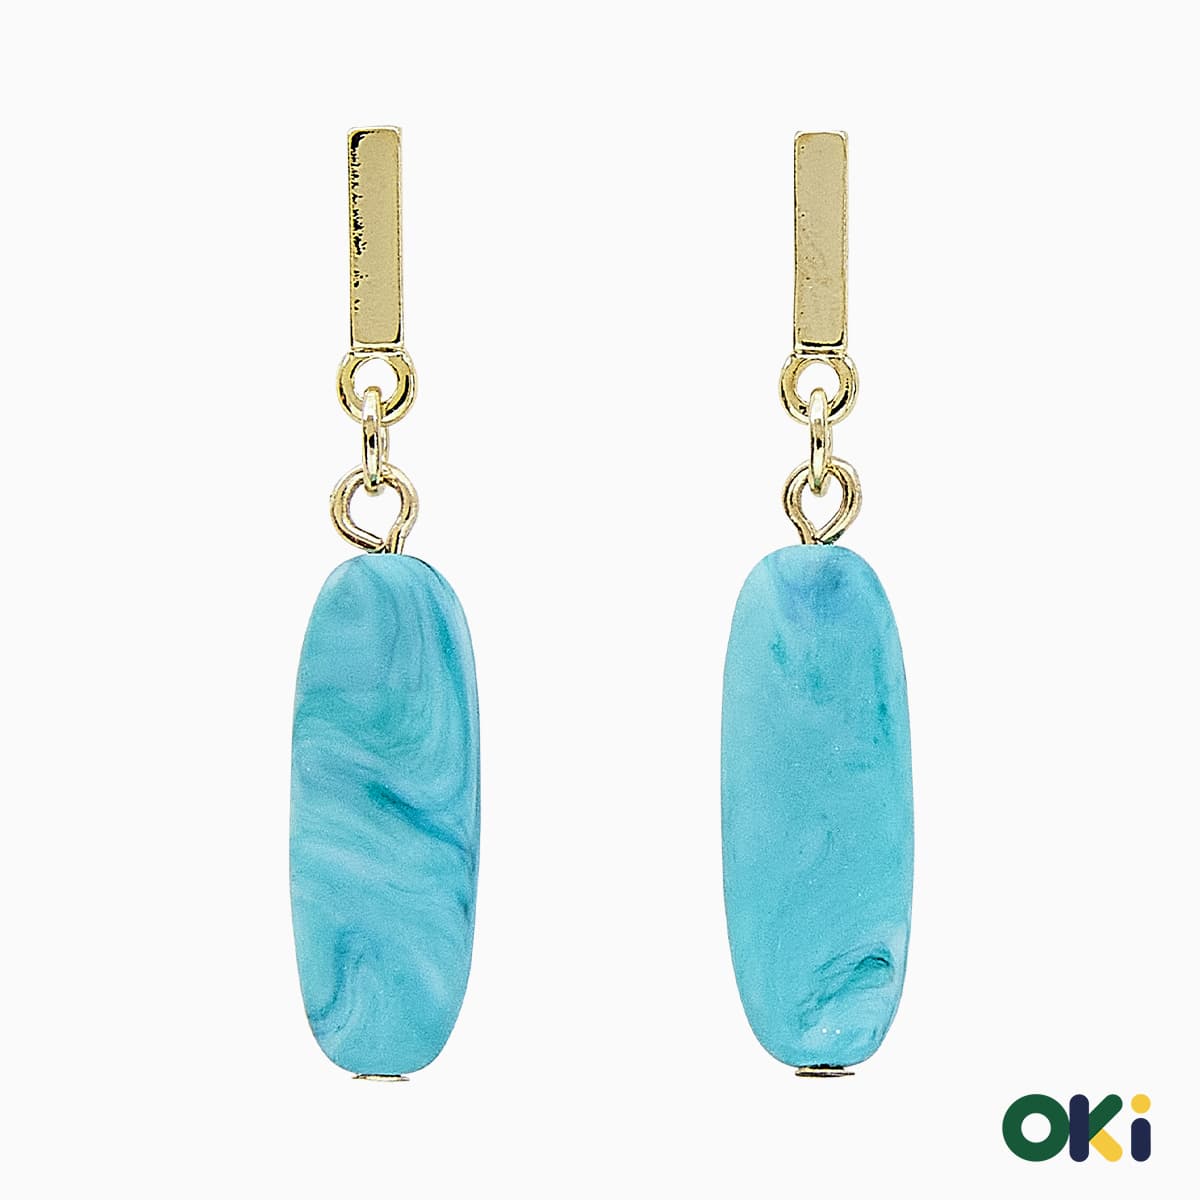 Blue ocean earrings OKi Fashion accessories jewely hypoallergenic